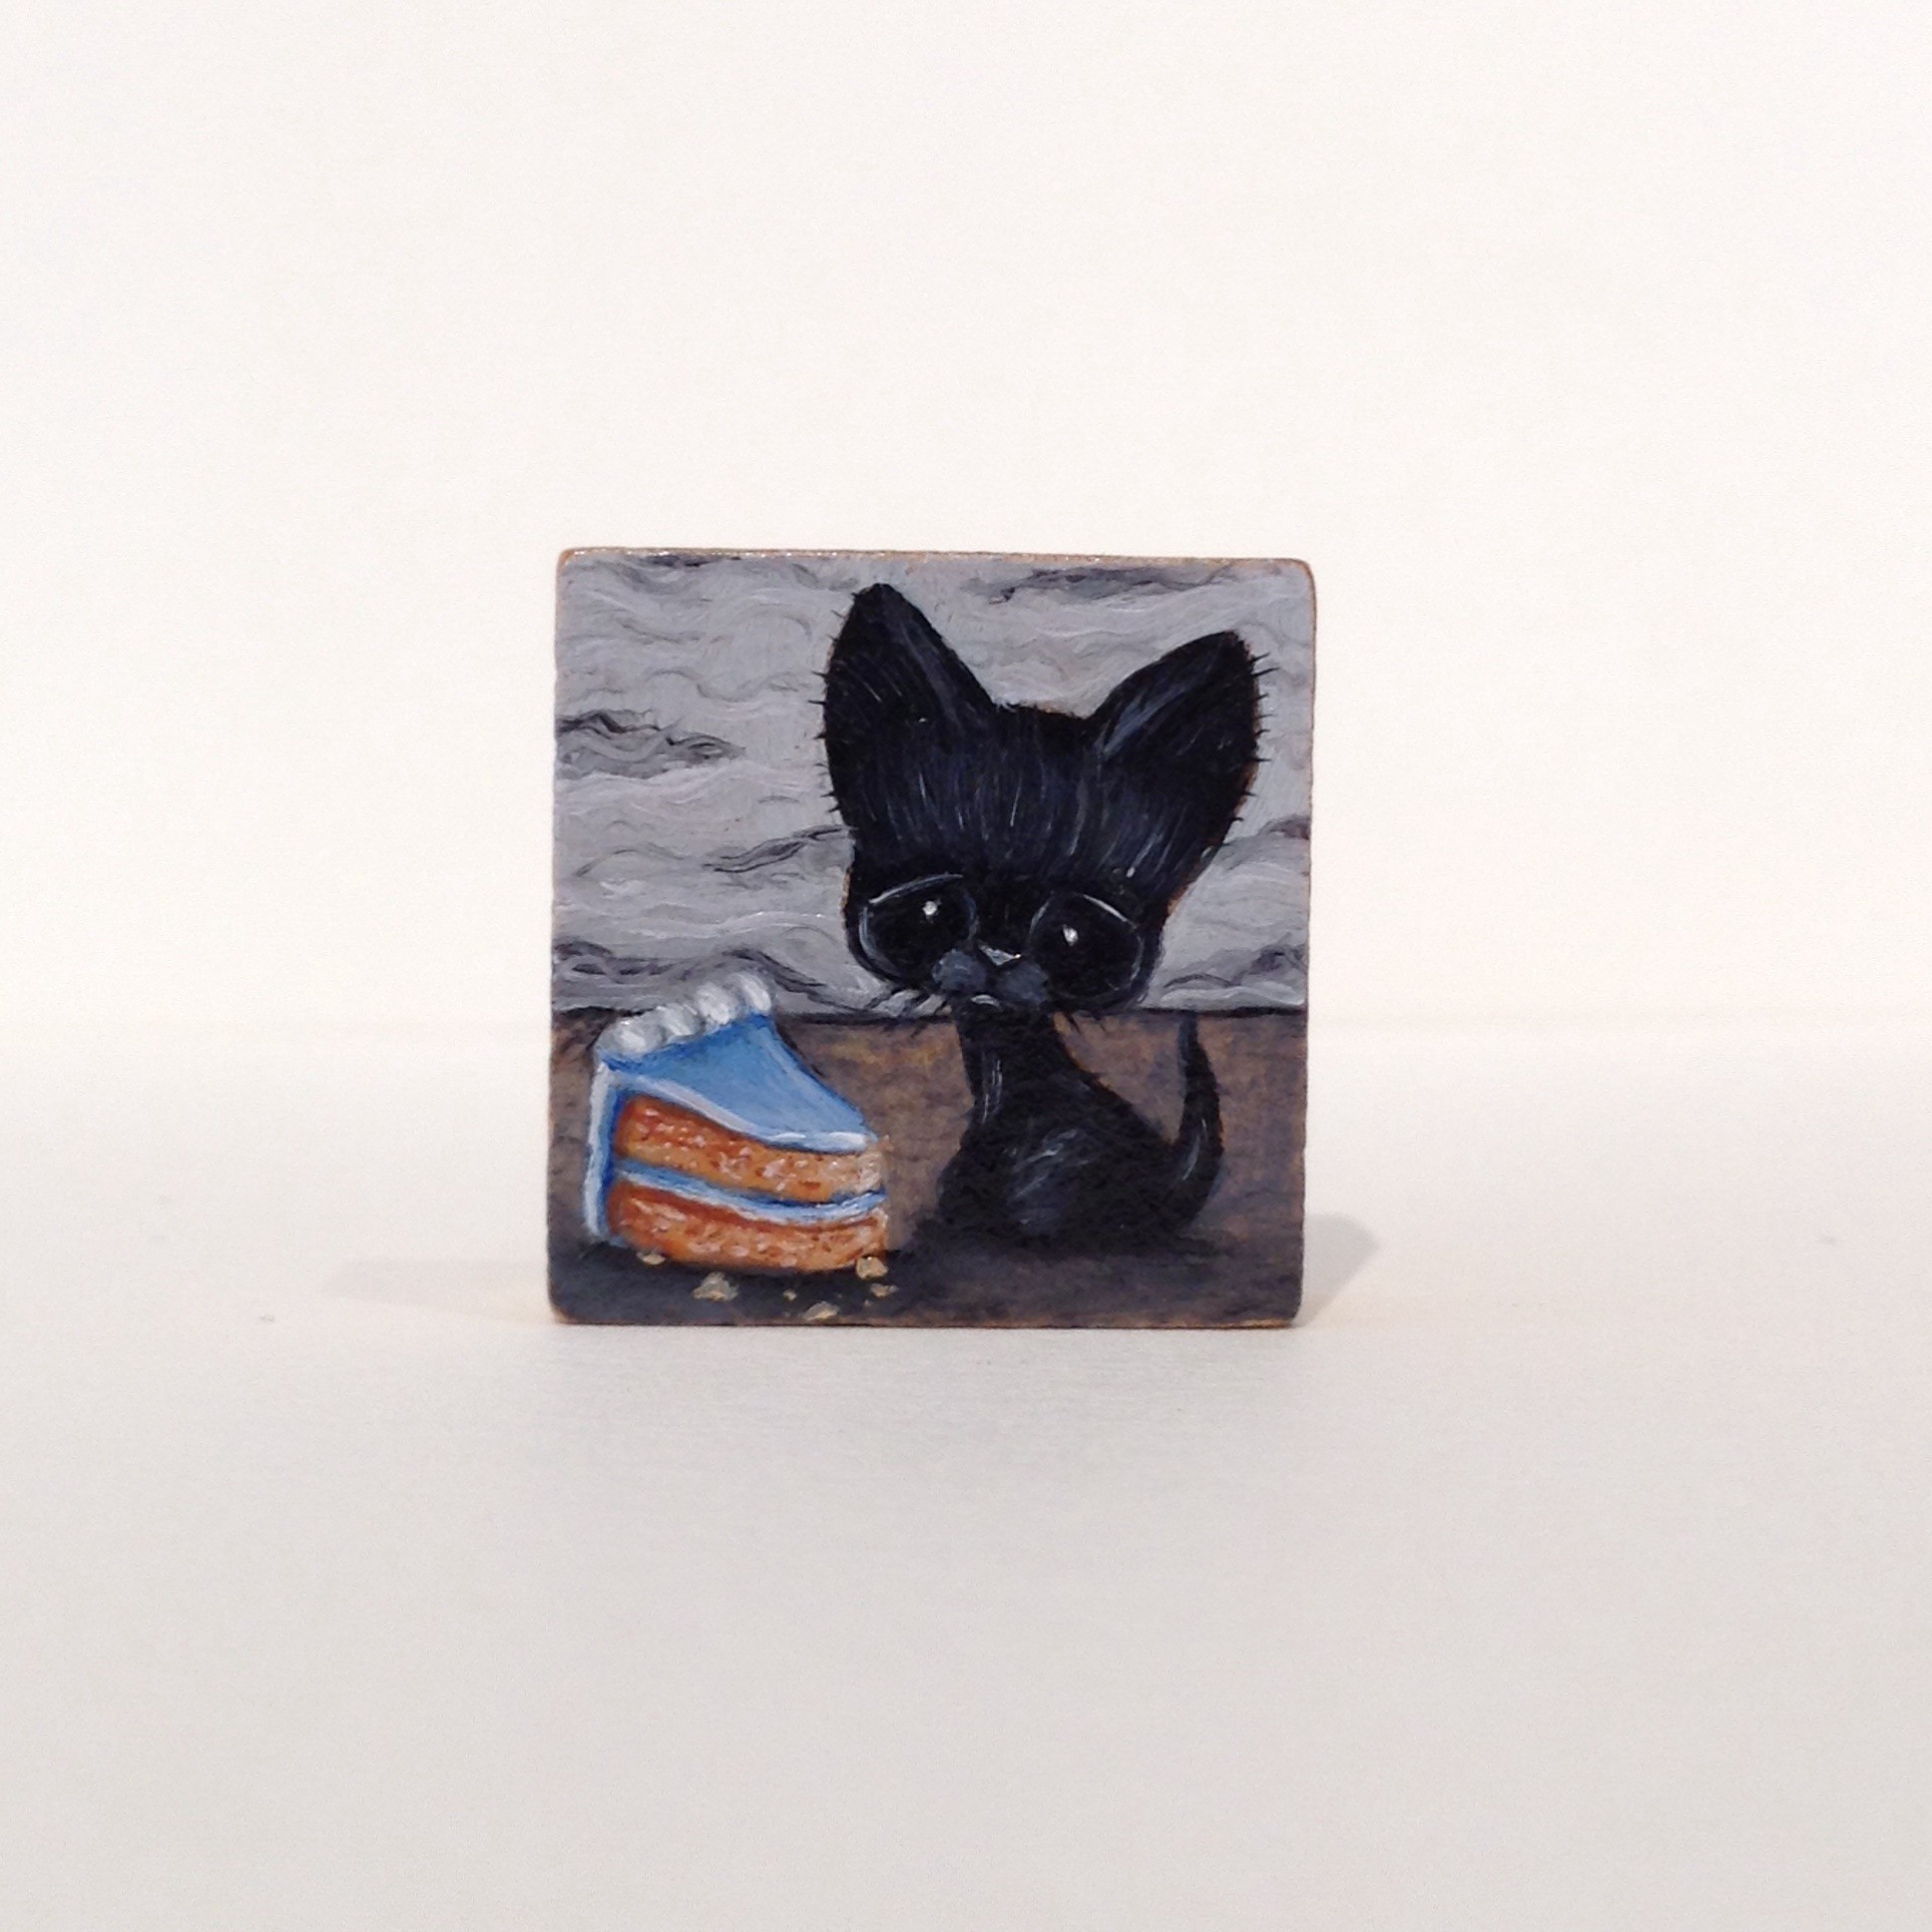 Siamese Cat Eye Miniature Original Oil Painting On Scrabble Tile Art Sugar Fueled